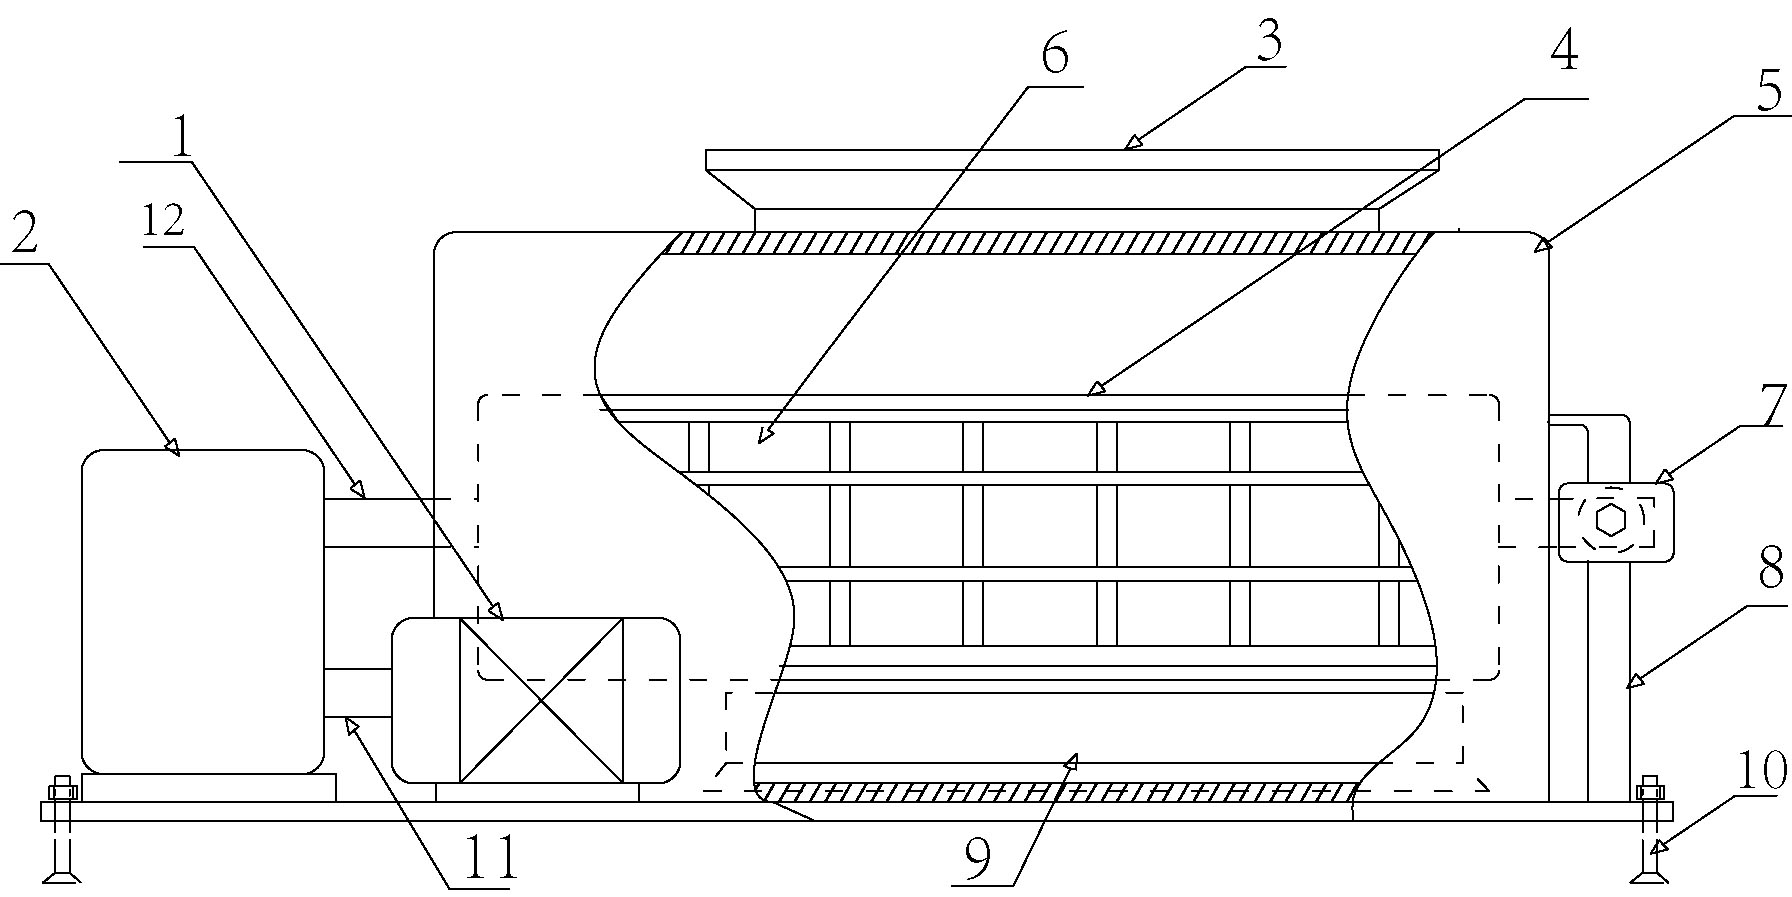 Multi-surface roller type crusher